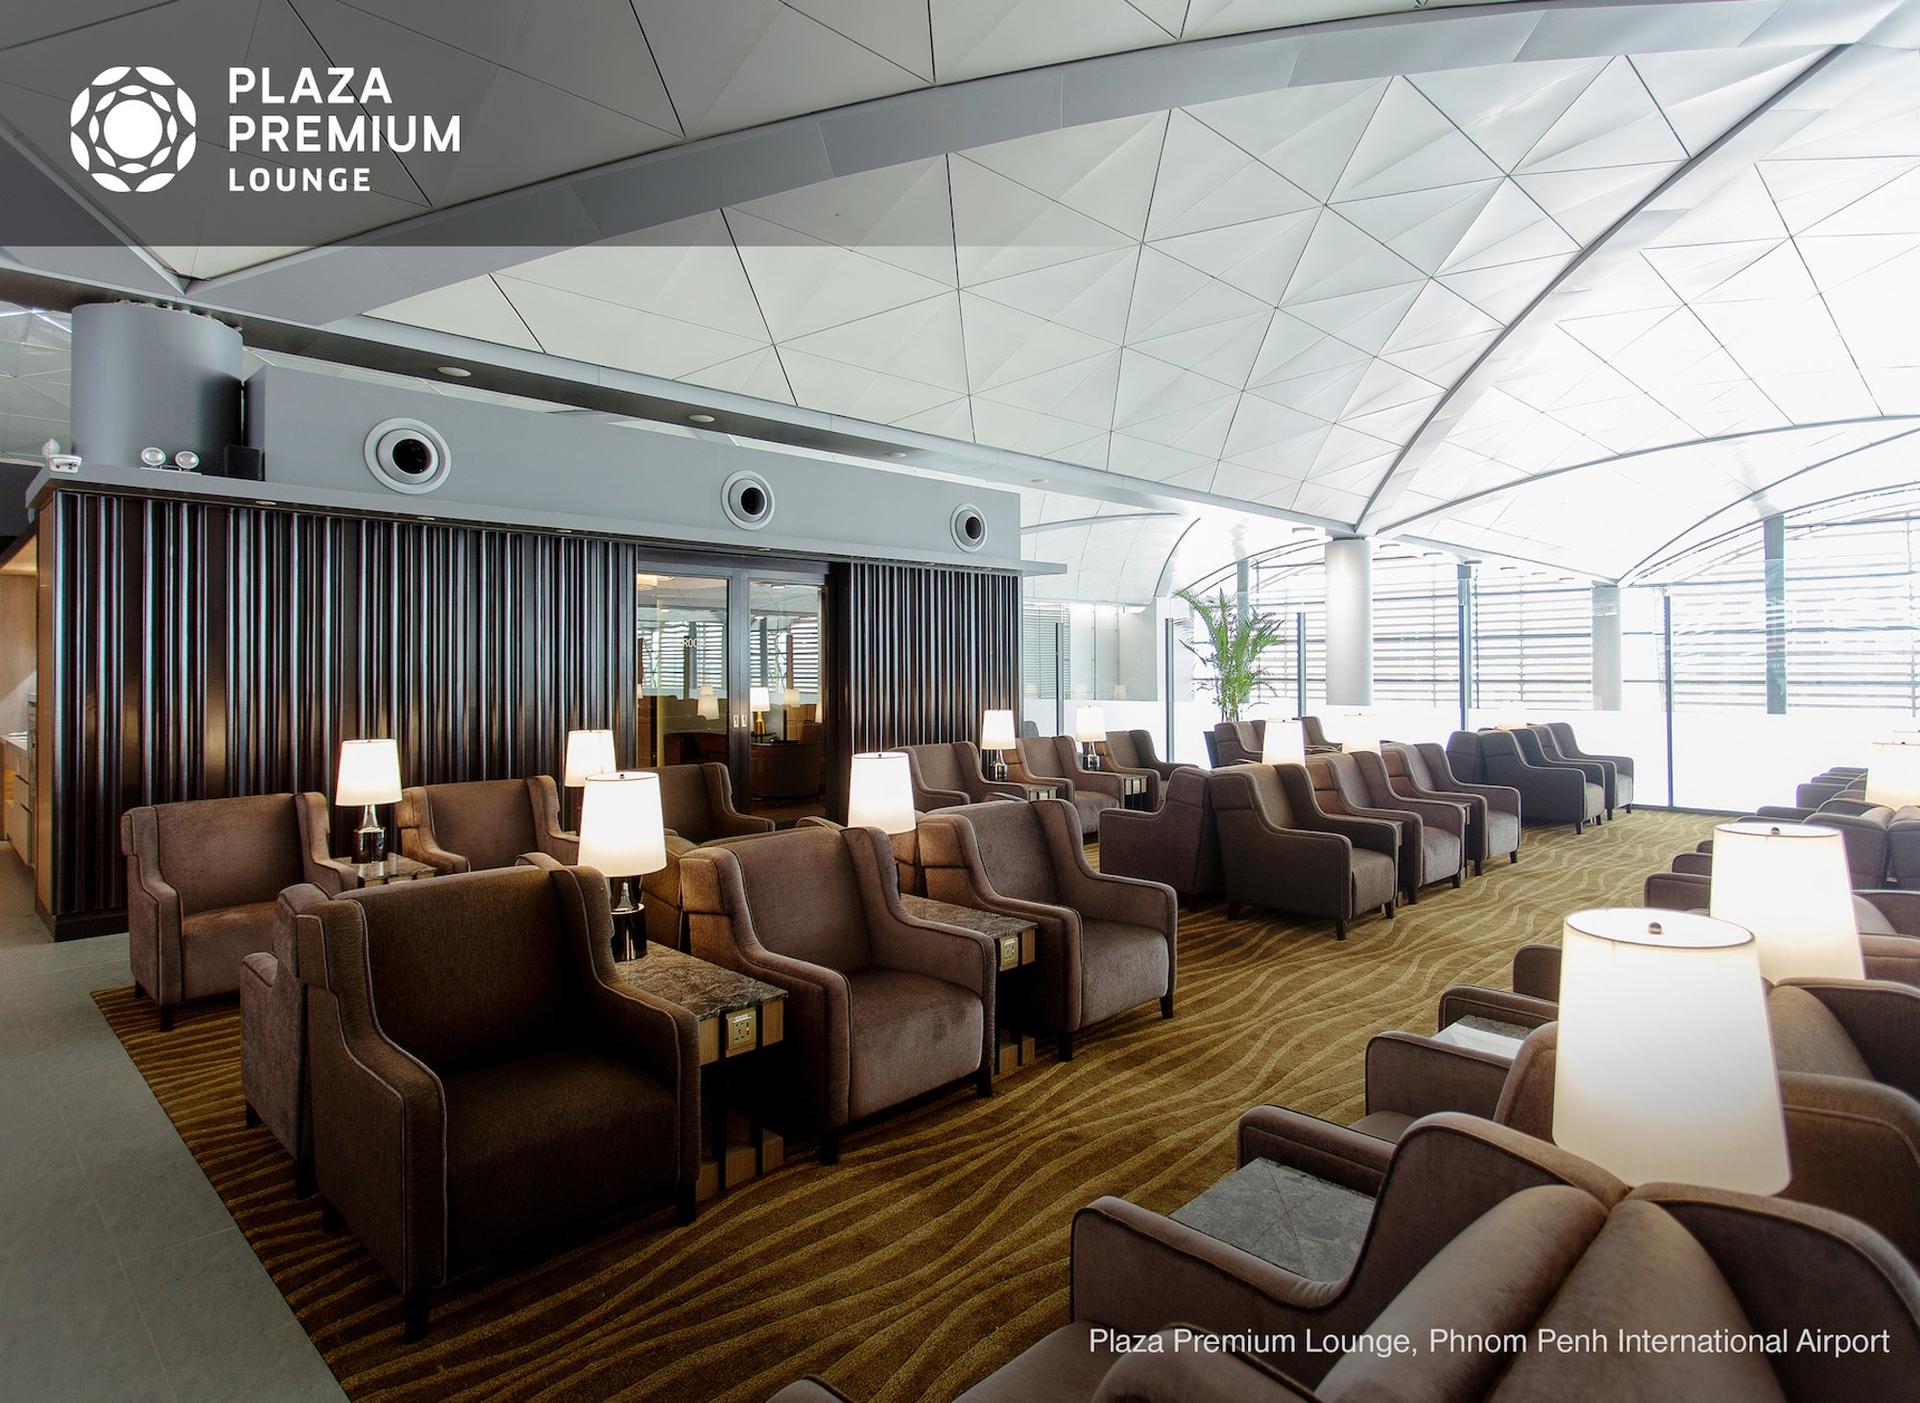 Plaza Premium Lounge image 29 of 34